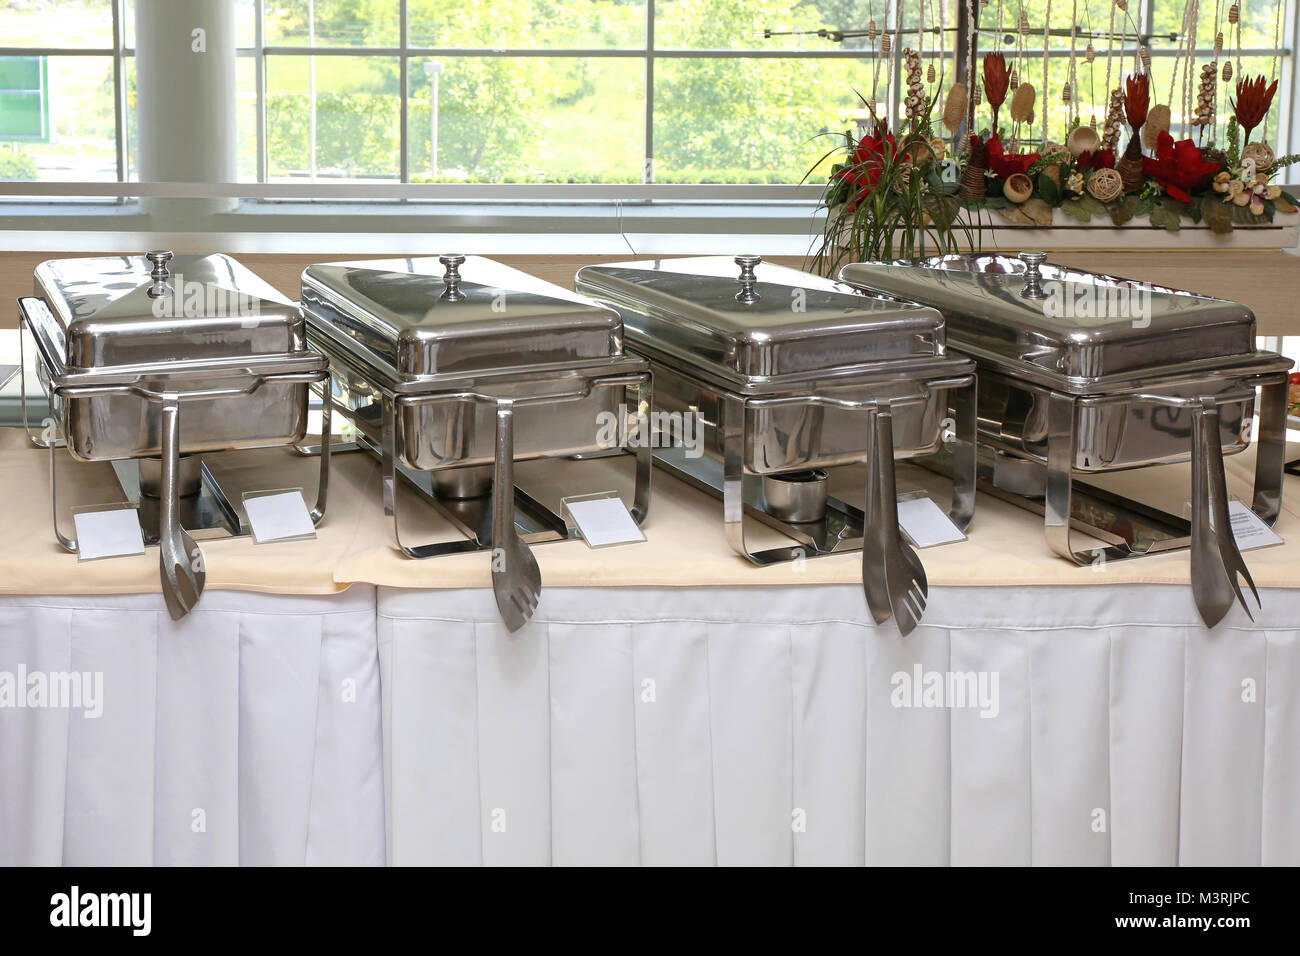 Mesa de buffet con acero inoxidable para calentar alimentos Fotografía de  stock - Alamy